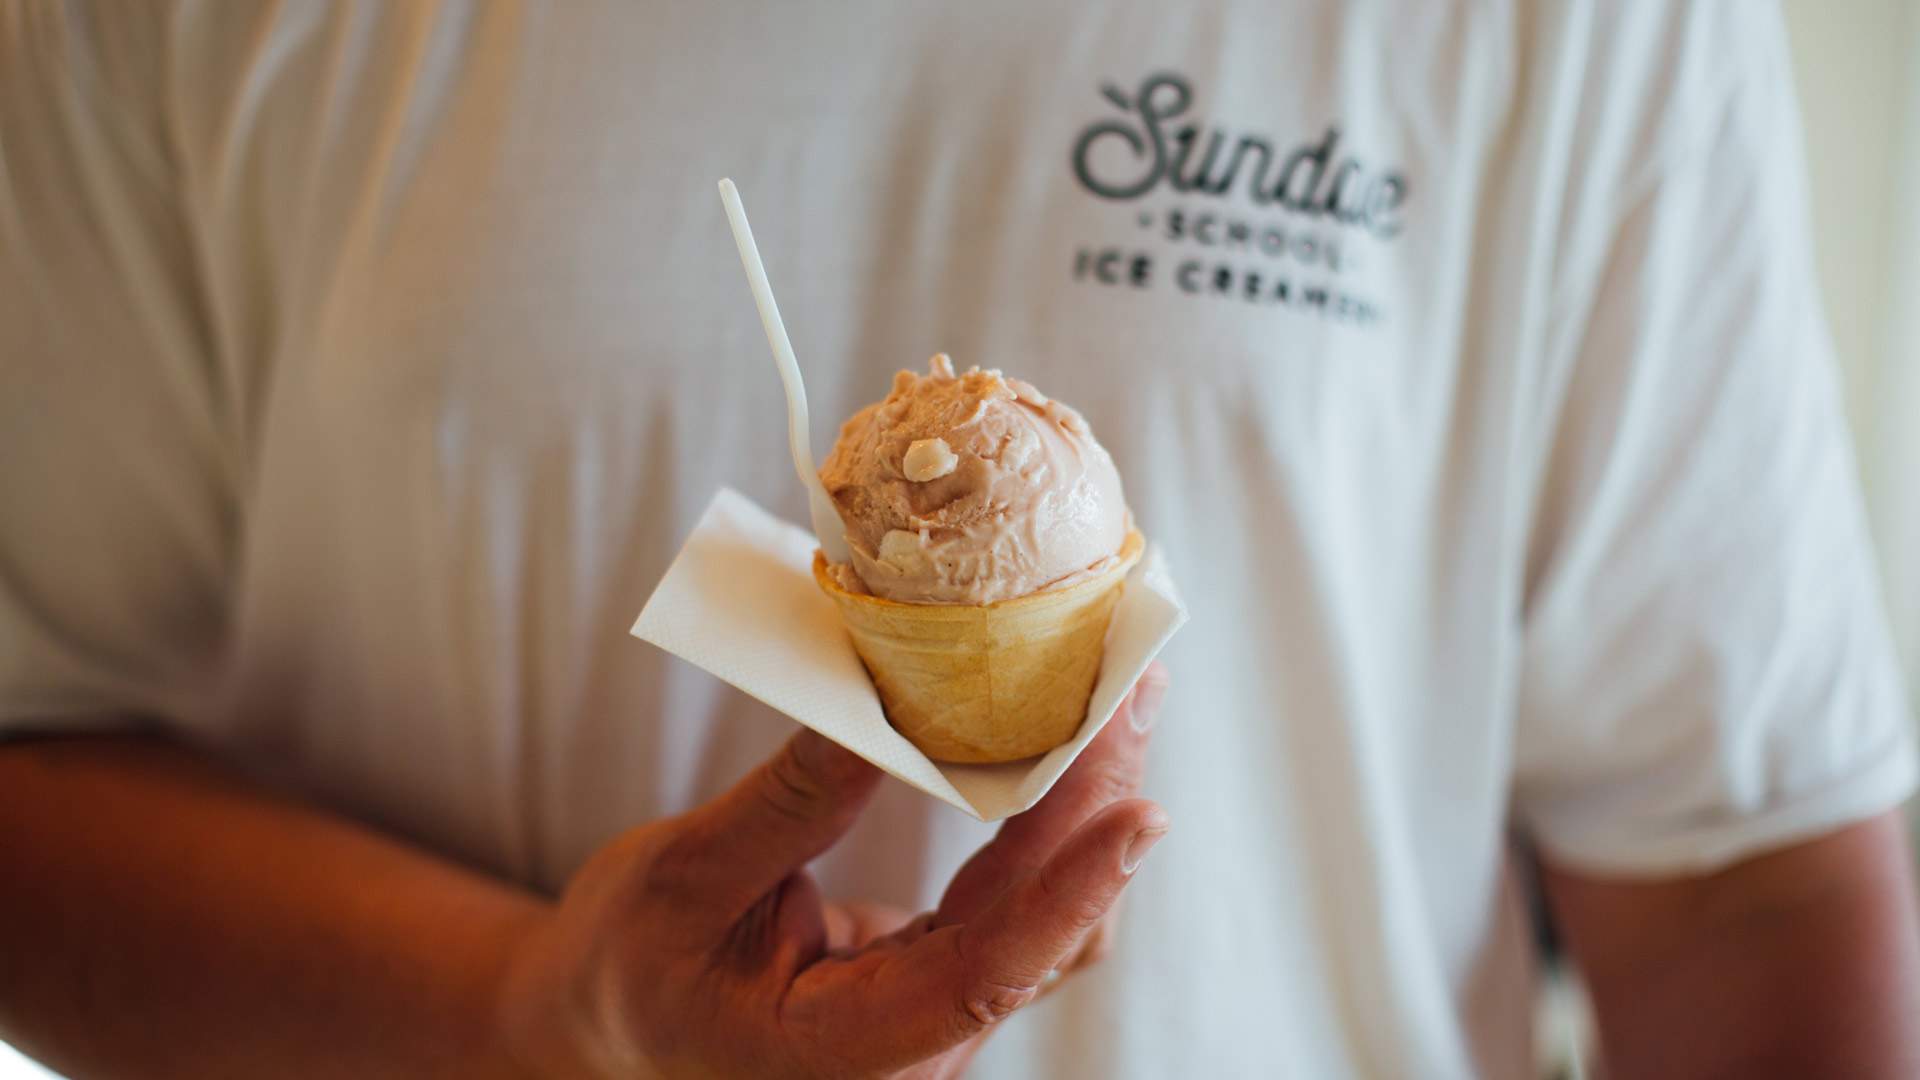 Sundae School Ice Creamery - CLOSED